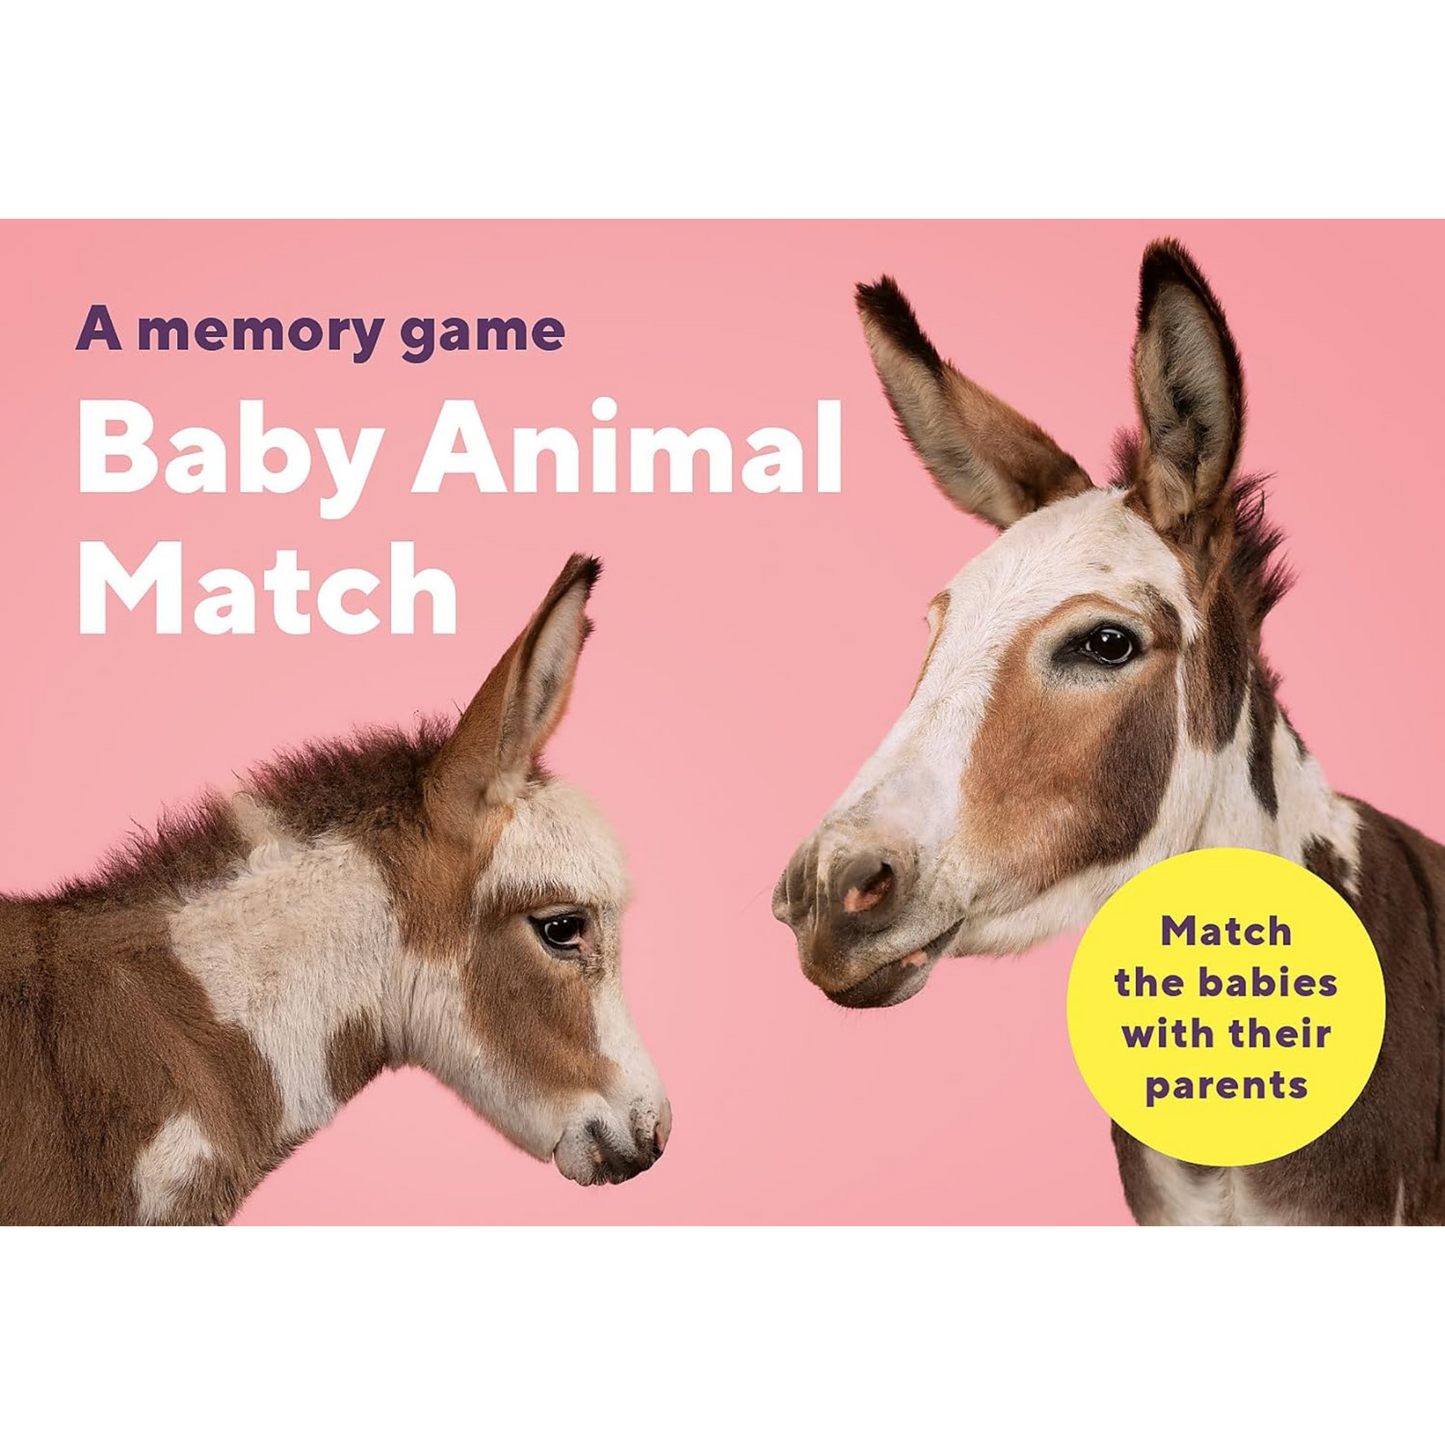 Baby Animal Match Memory Game